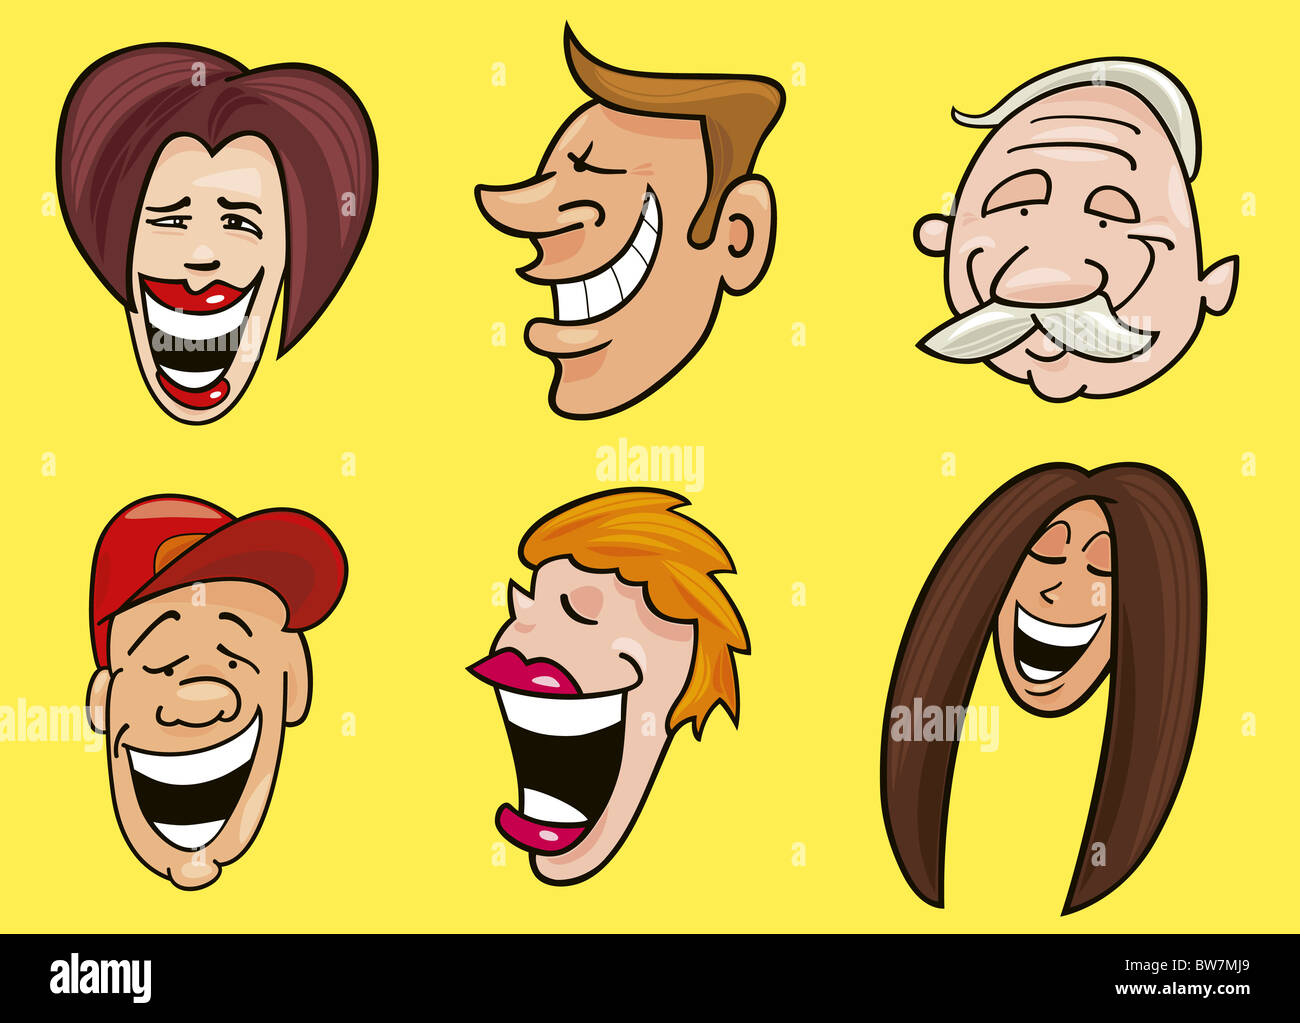 Cartoon illustration of set of funny faces Stock Photo